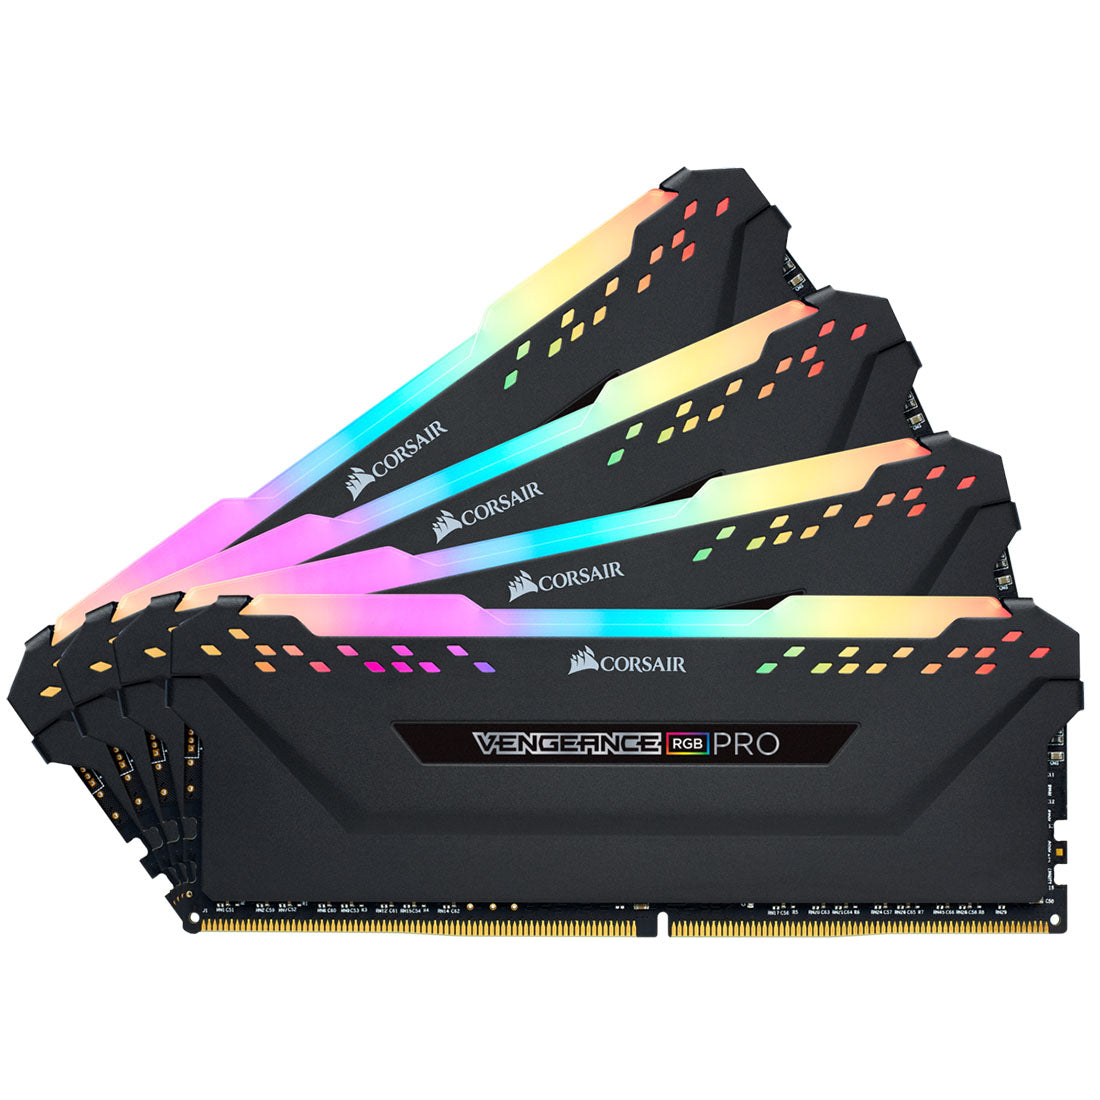 Corsair Vengeance RGB Pro 64GB (4x16GB) DDR4 RAM 3600MHz CL18 Desktop Memory